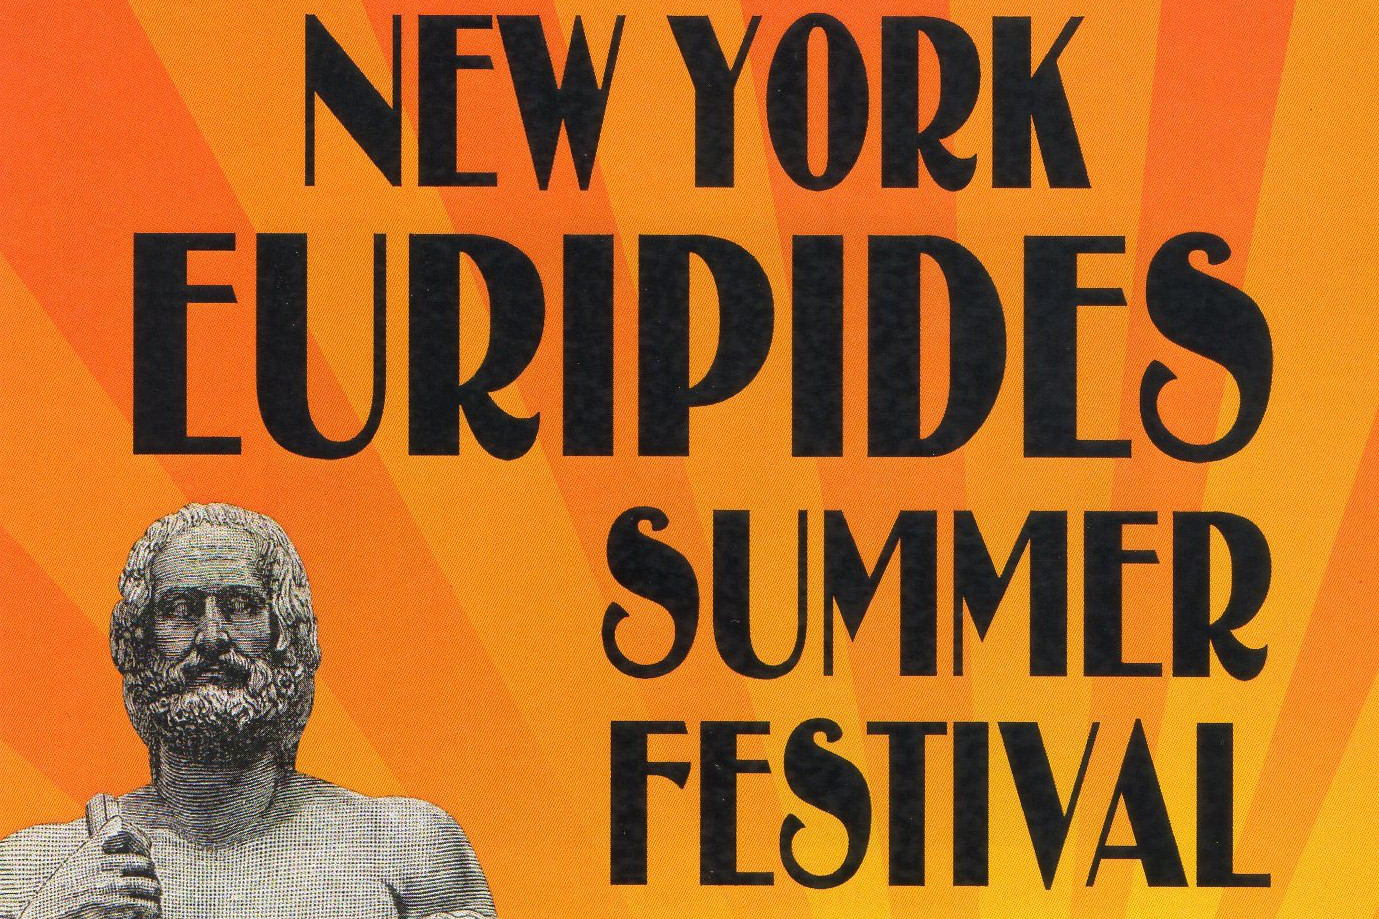 Euripides Summer Festival